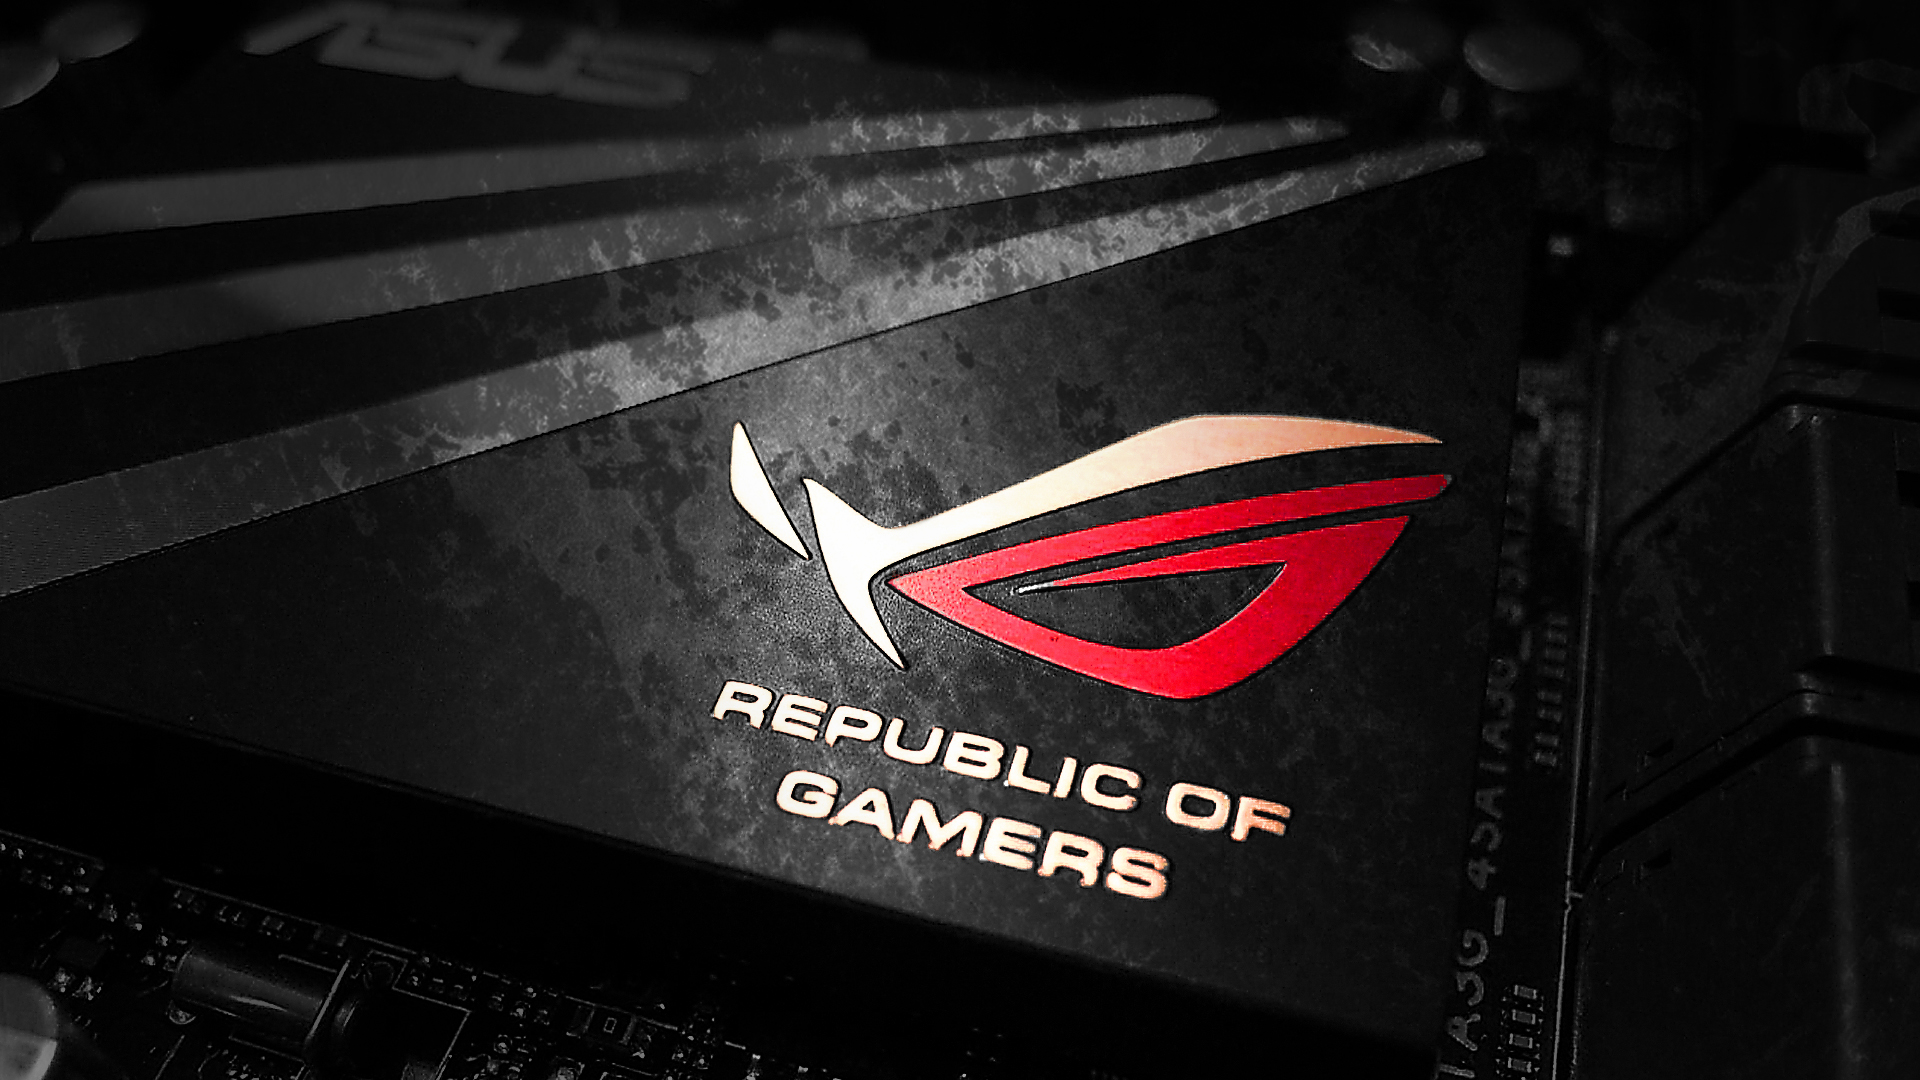 Republic of Gamers HD Backgrounds | PixelsTalk.Net